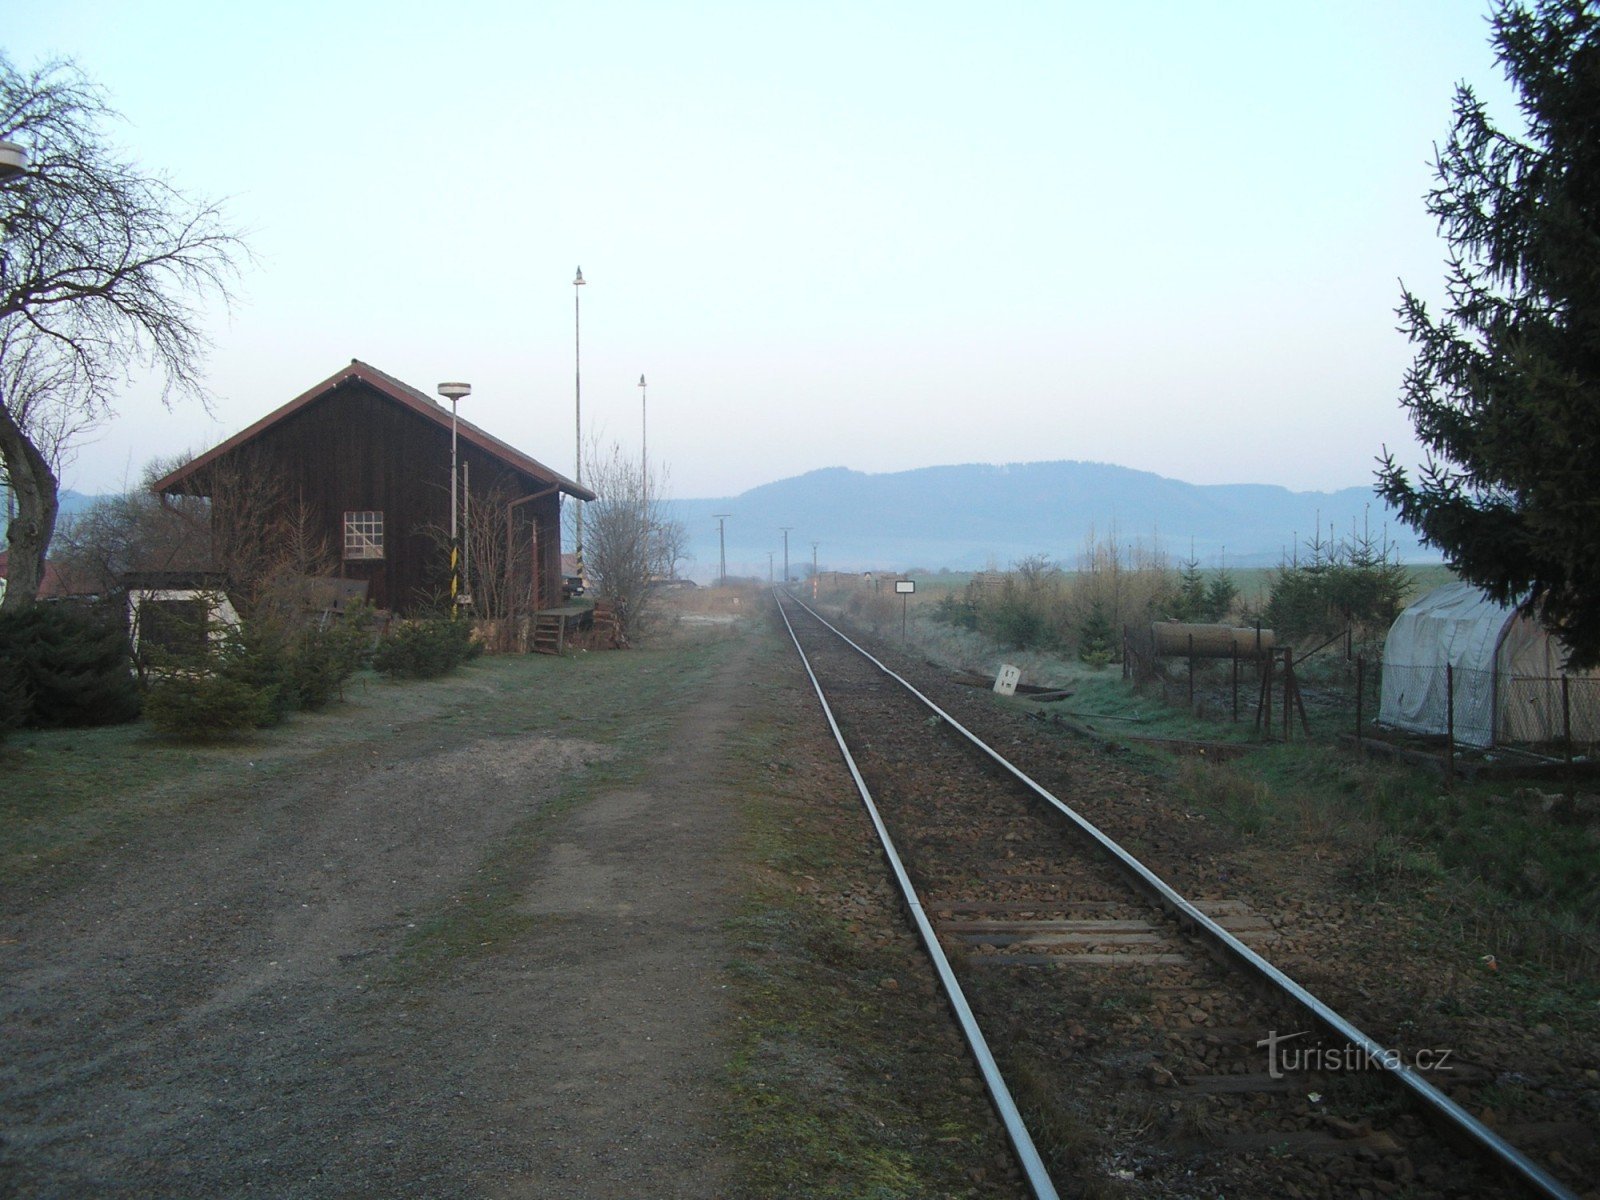 Kunčina railway station